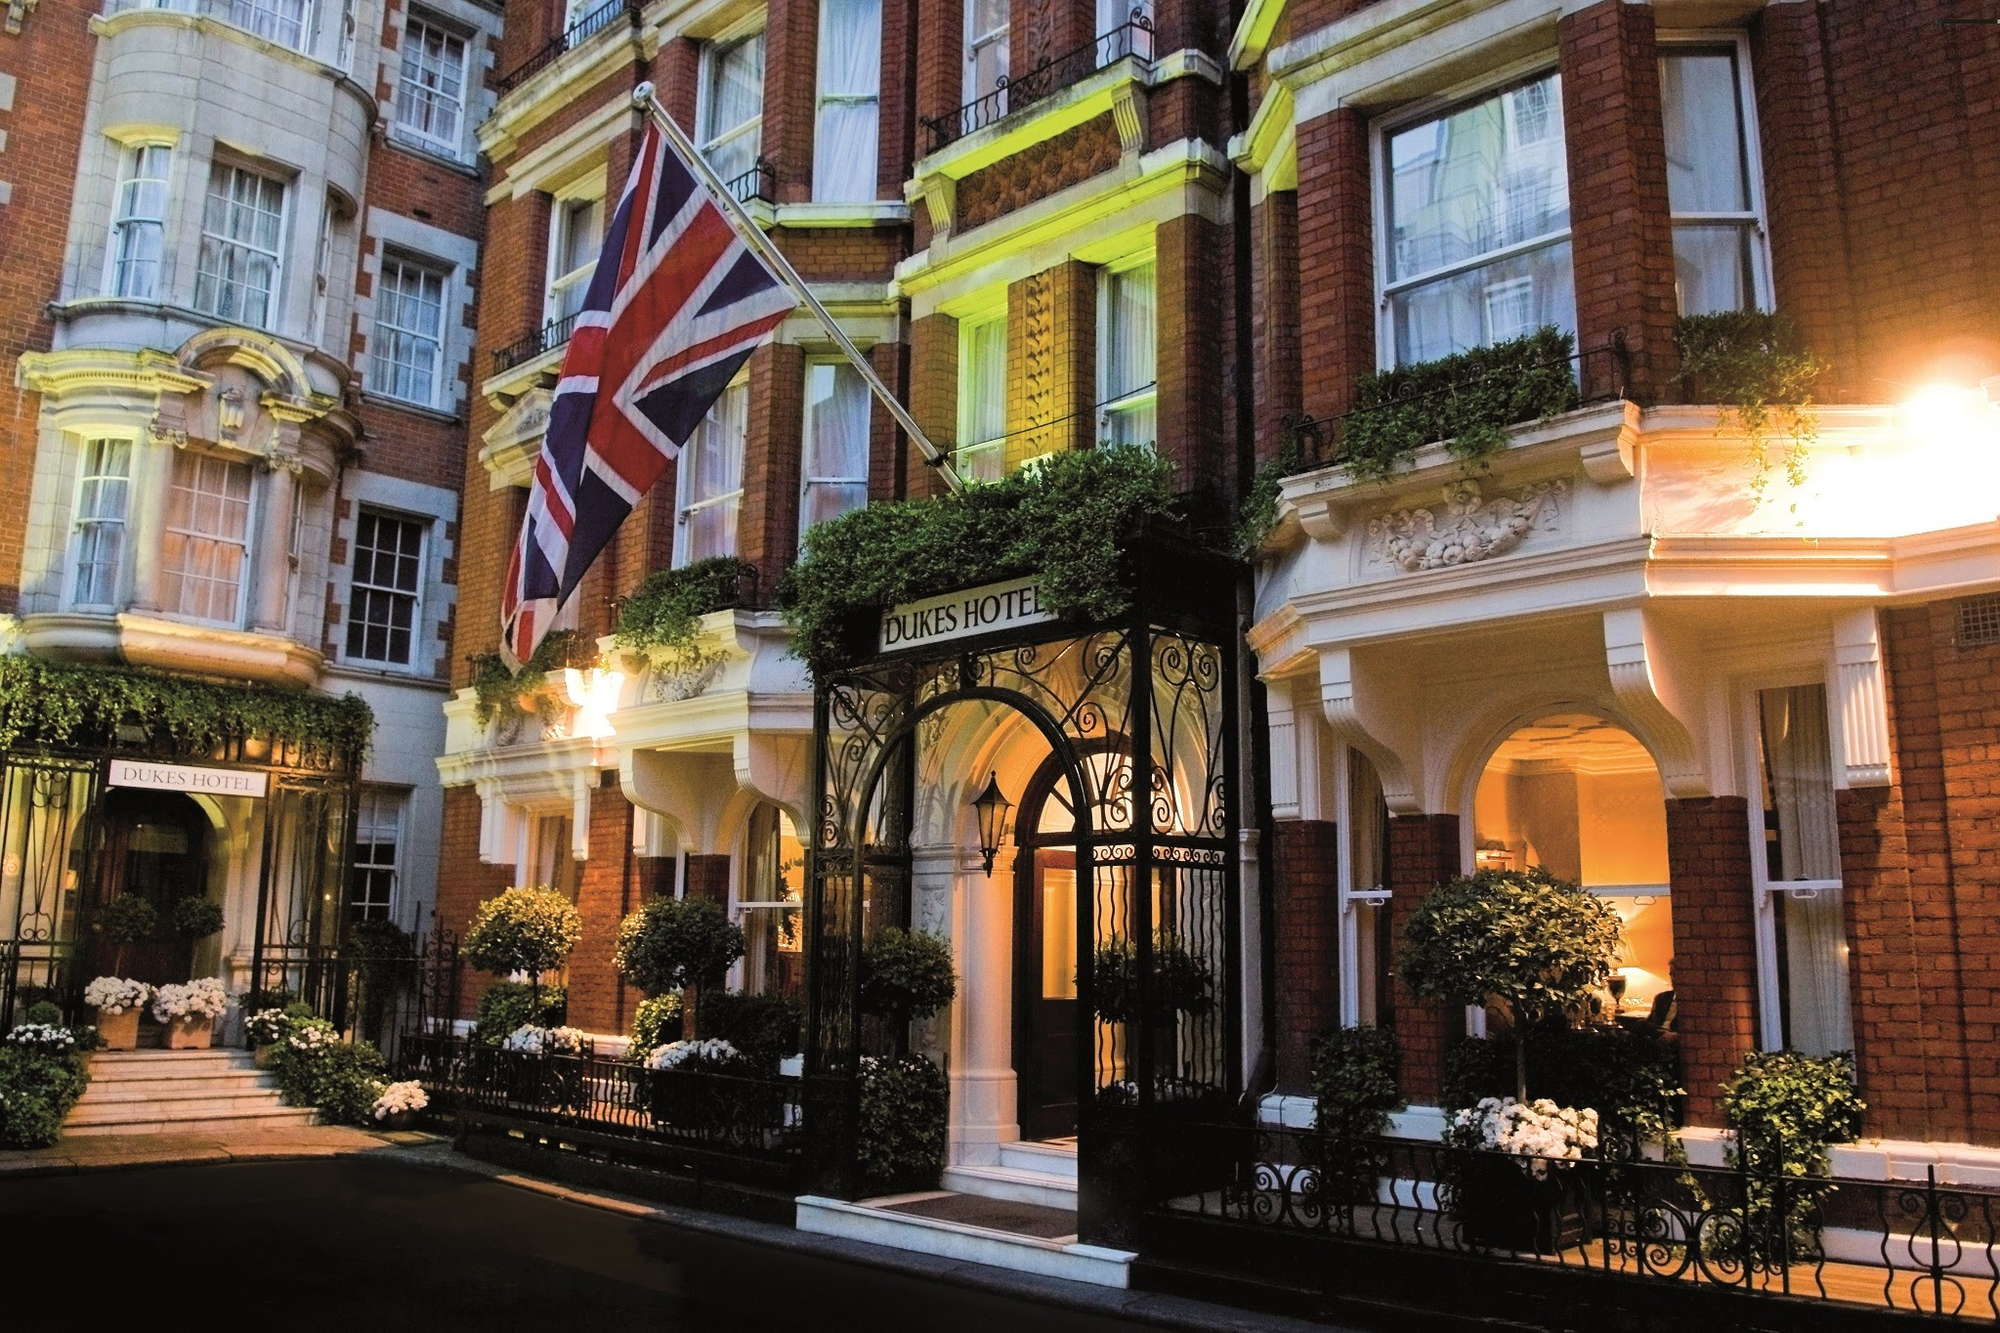 May Fair London hotel review, an ideal location near Buckingham